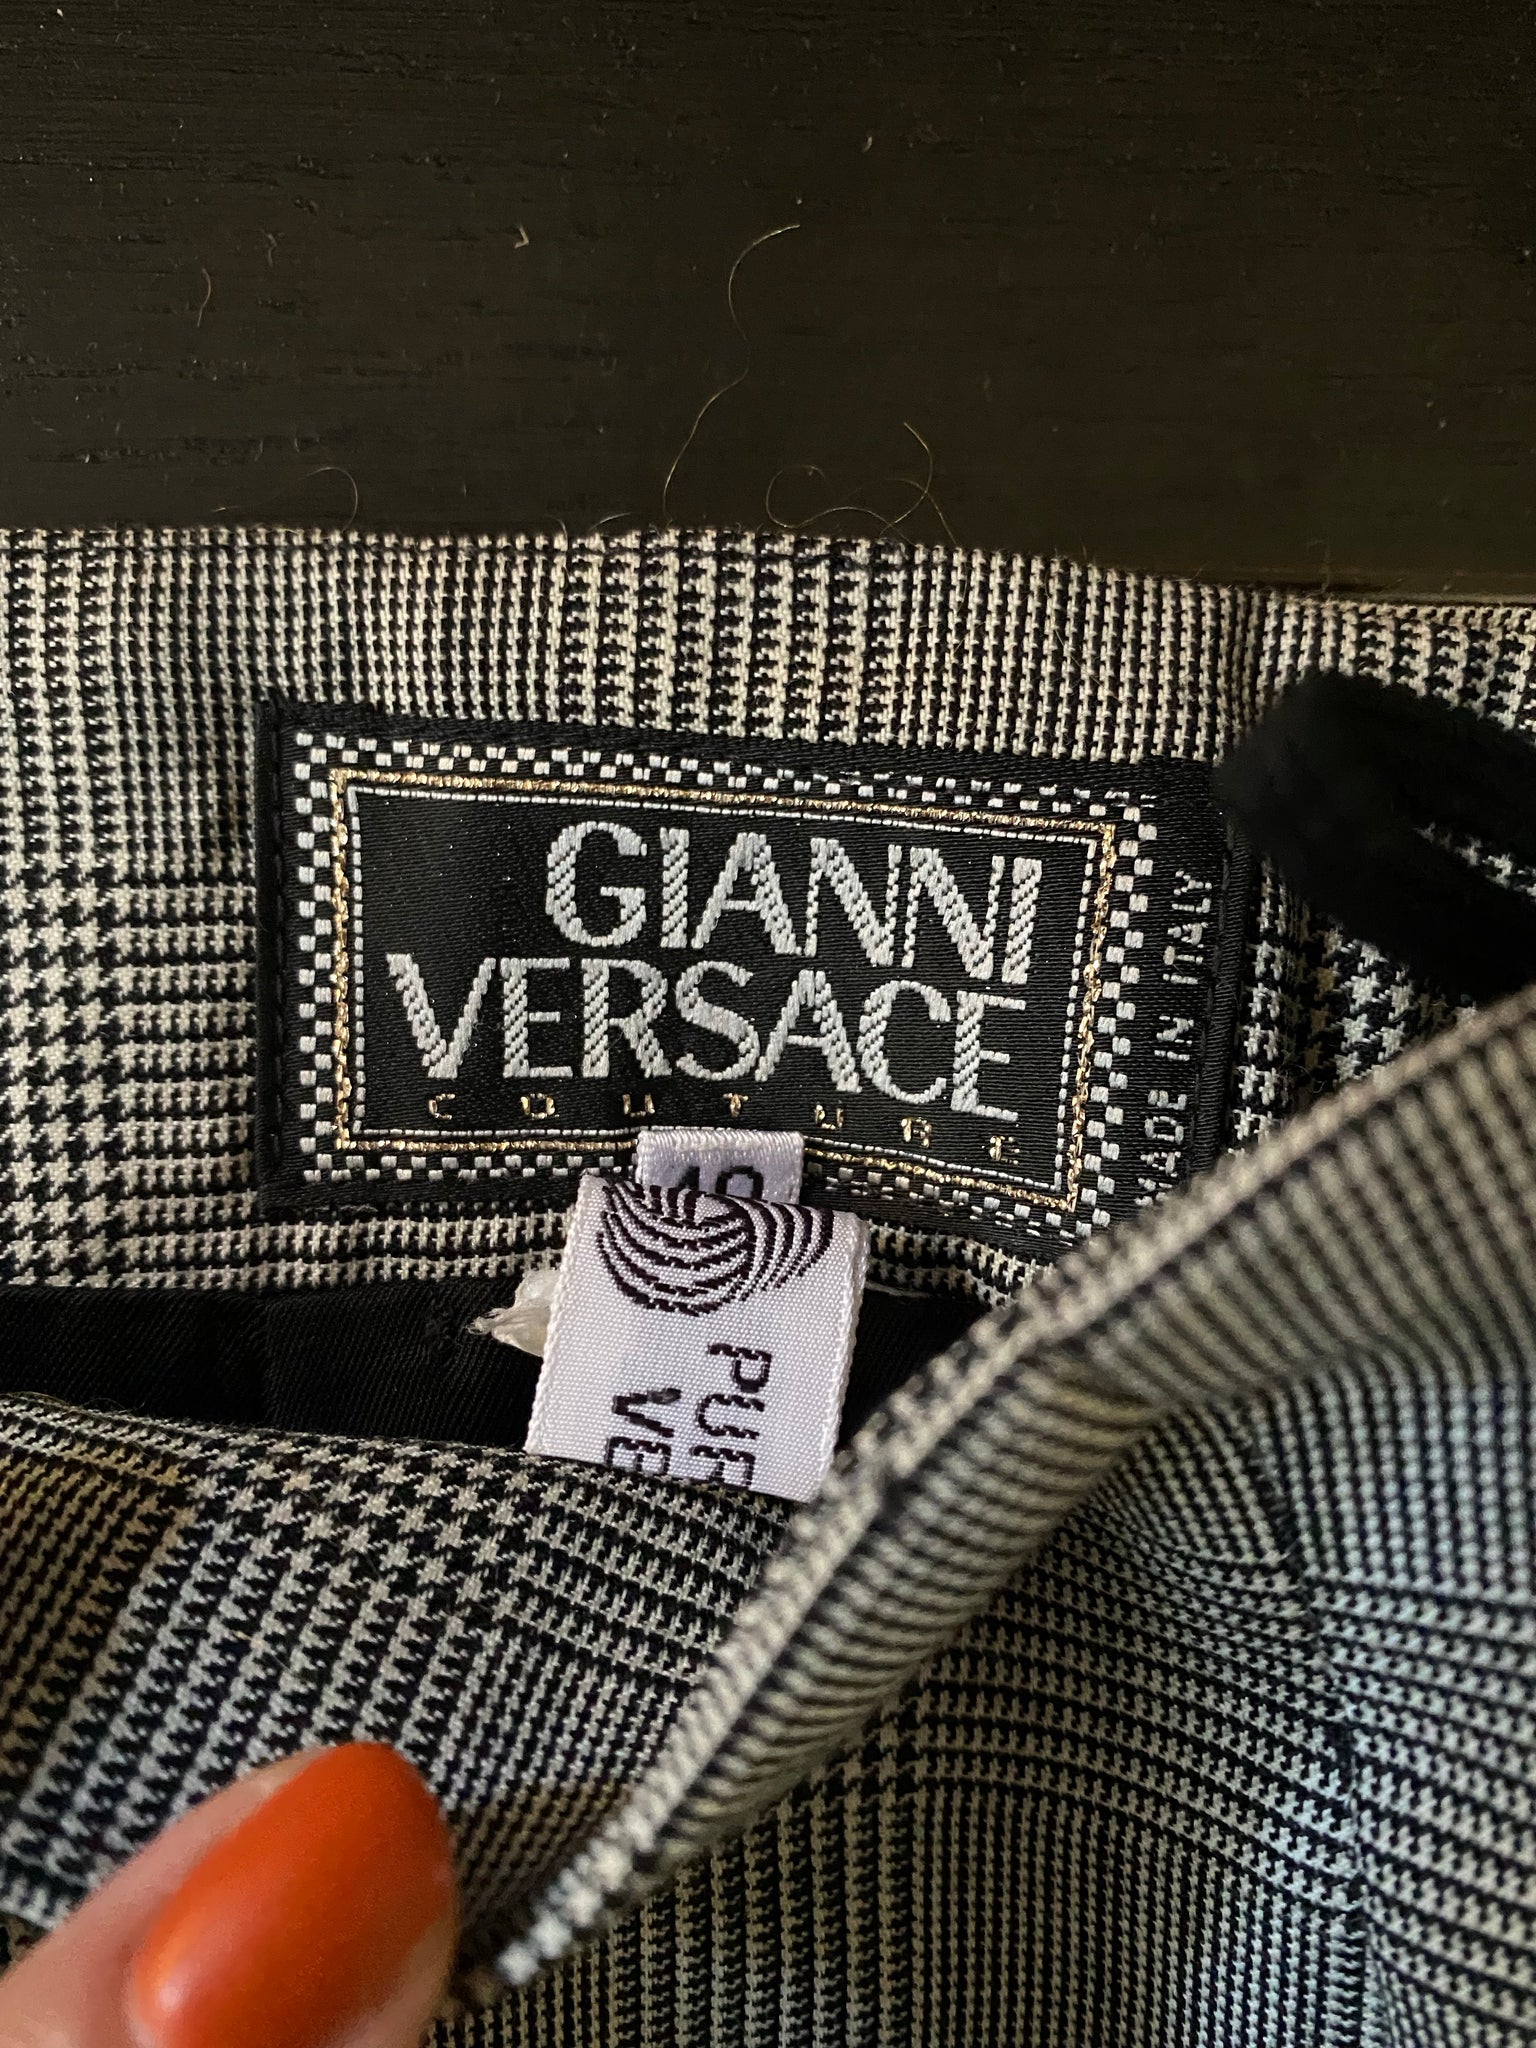 Gianni Versace Vintage Nineties Prince of Wales Over the Knee Skirt